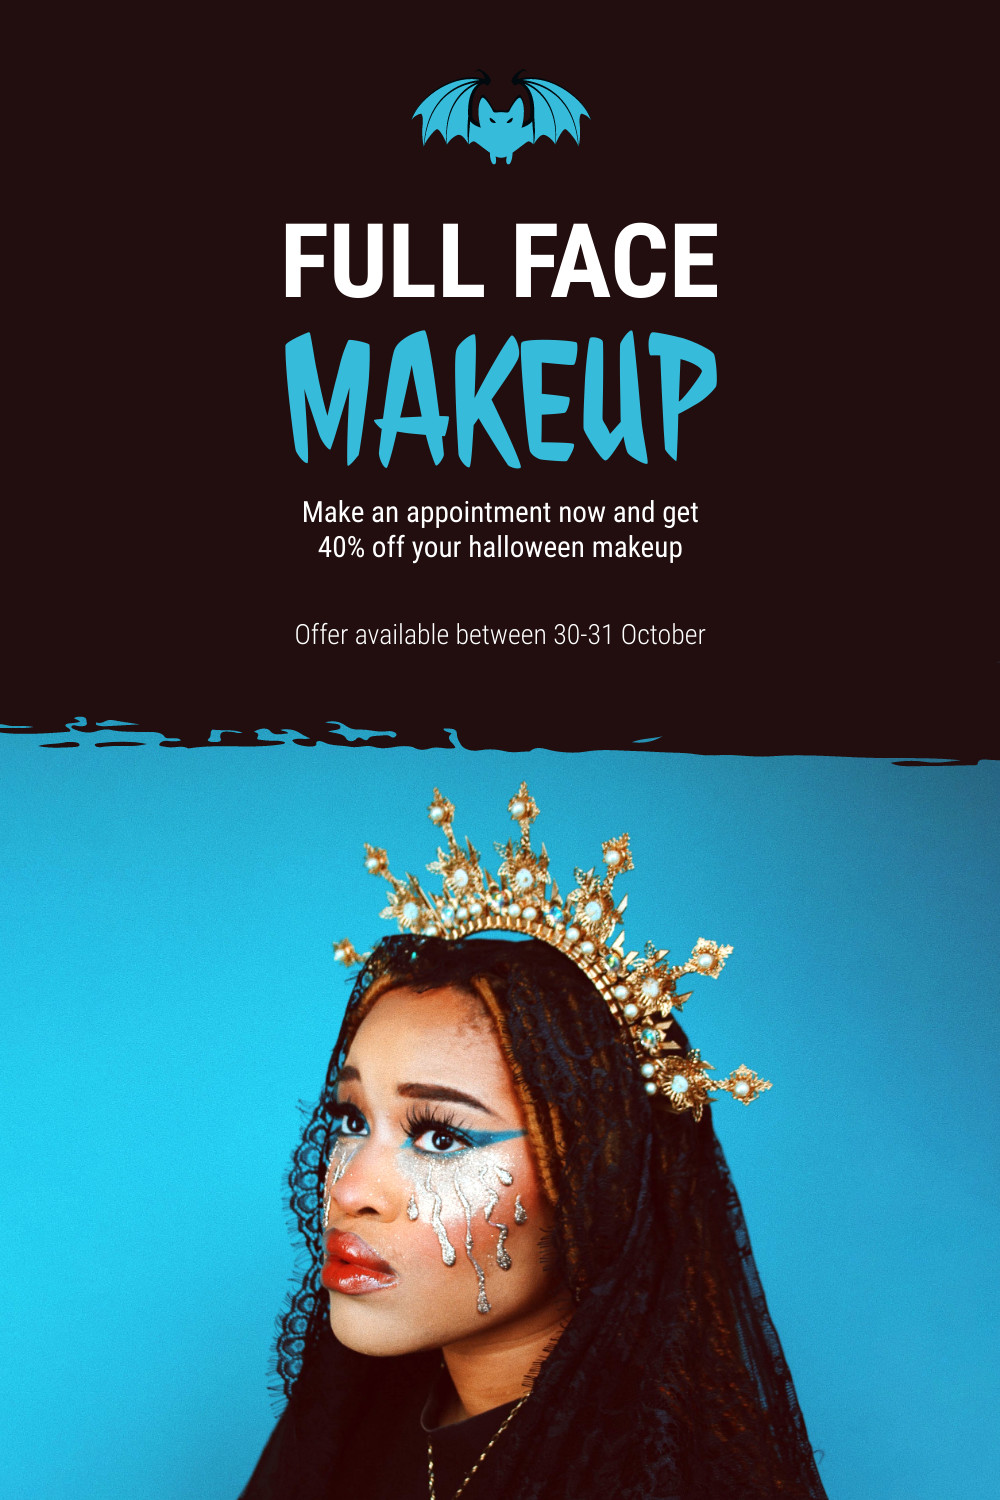 Full Face Halloween Makeup Facebook Cover 820x360